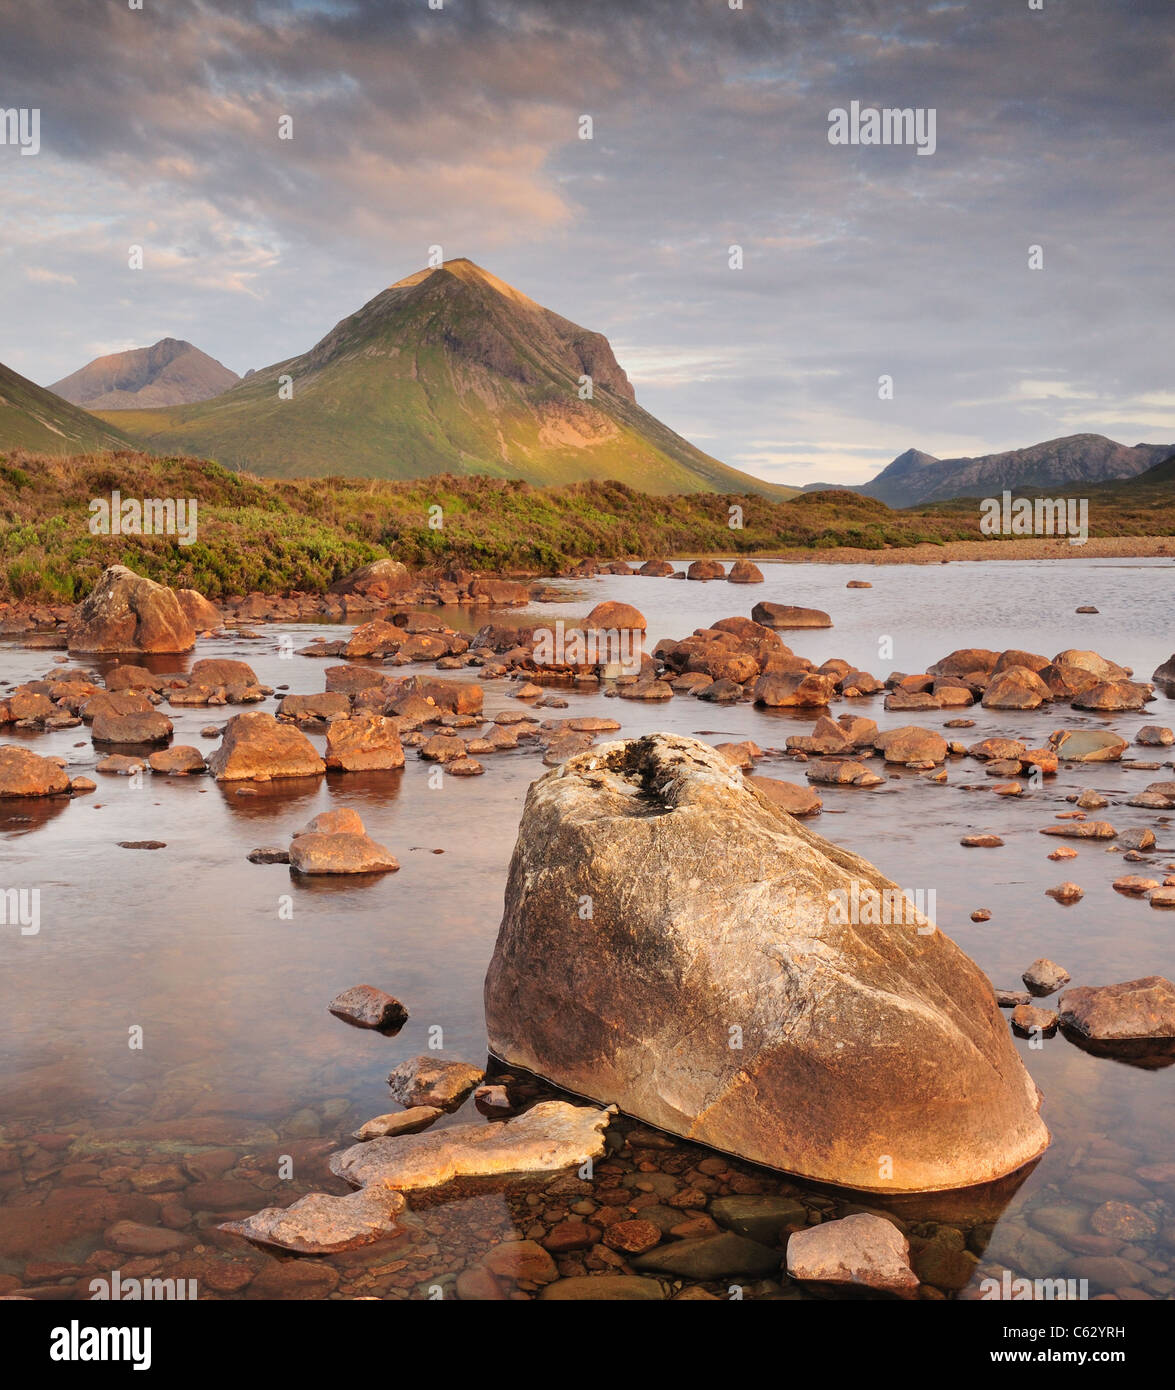 Rocks in the River Sligachan with Marsco and Garbh Bheinn in the background, Glen Sligachan, Isle of Skye, Scotland Stock Photo